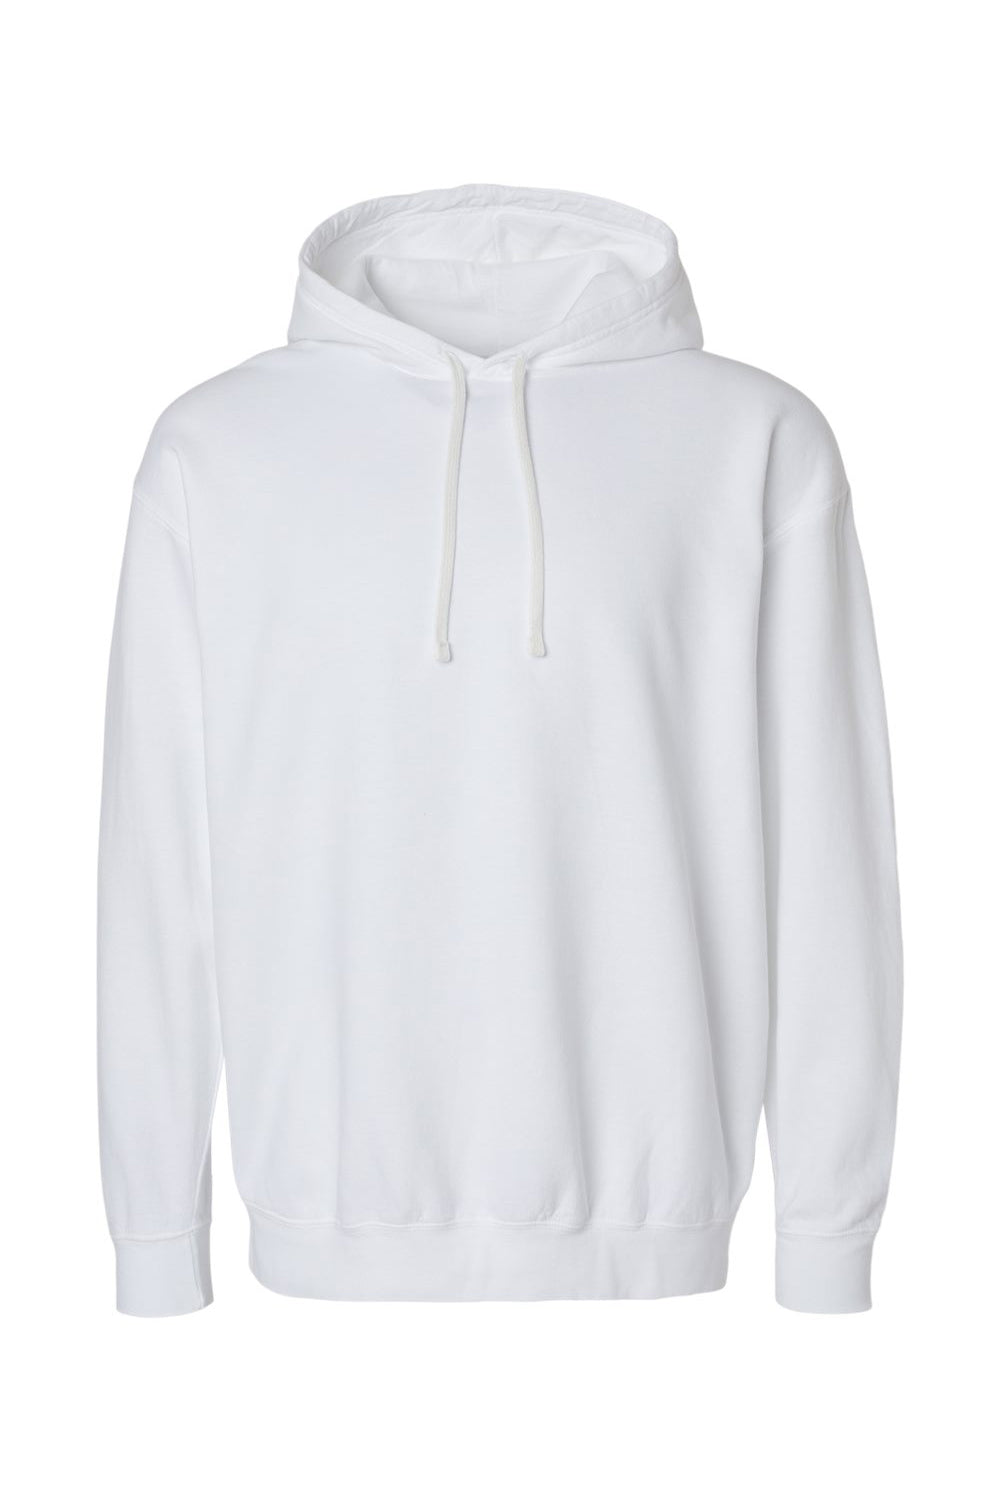 Comfort Colors 1467 Mens Garment Dyed Fleece Hooded Sweatshirt Hoodie White Flat Front